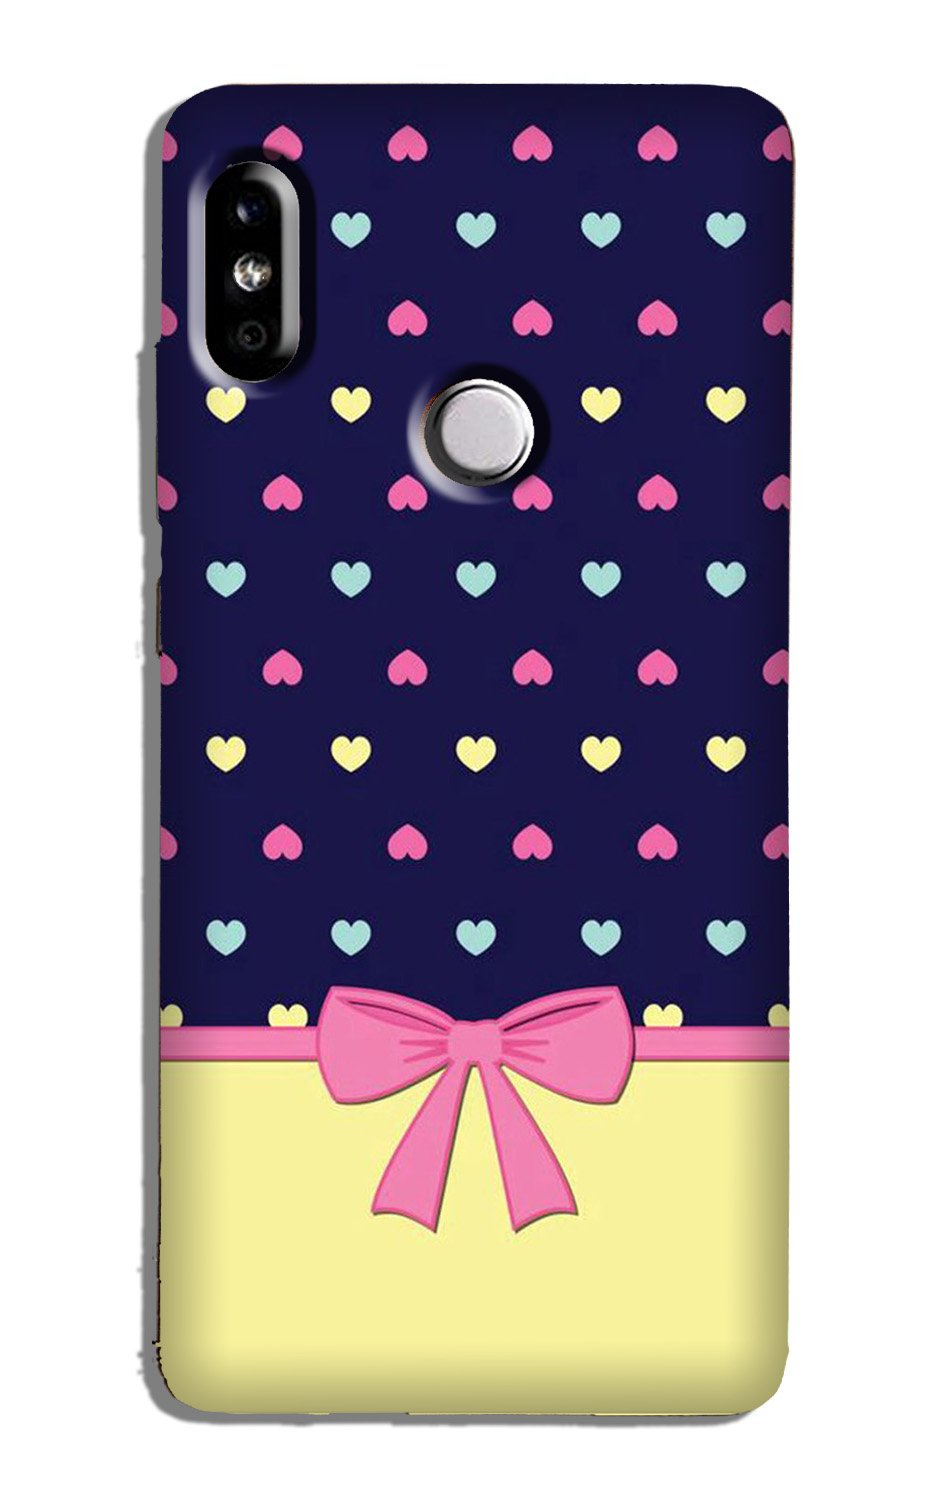 Gift Wrap5 Case for Xiaomi Redmi Y3